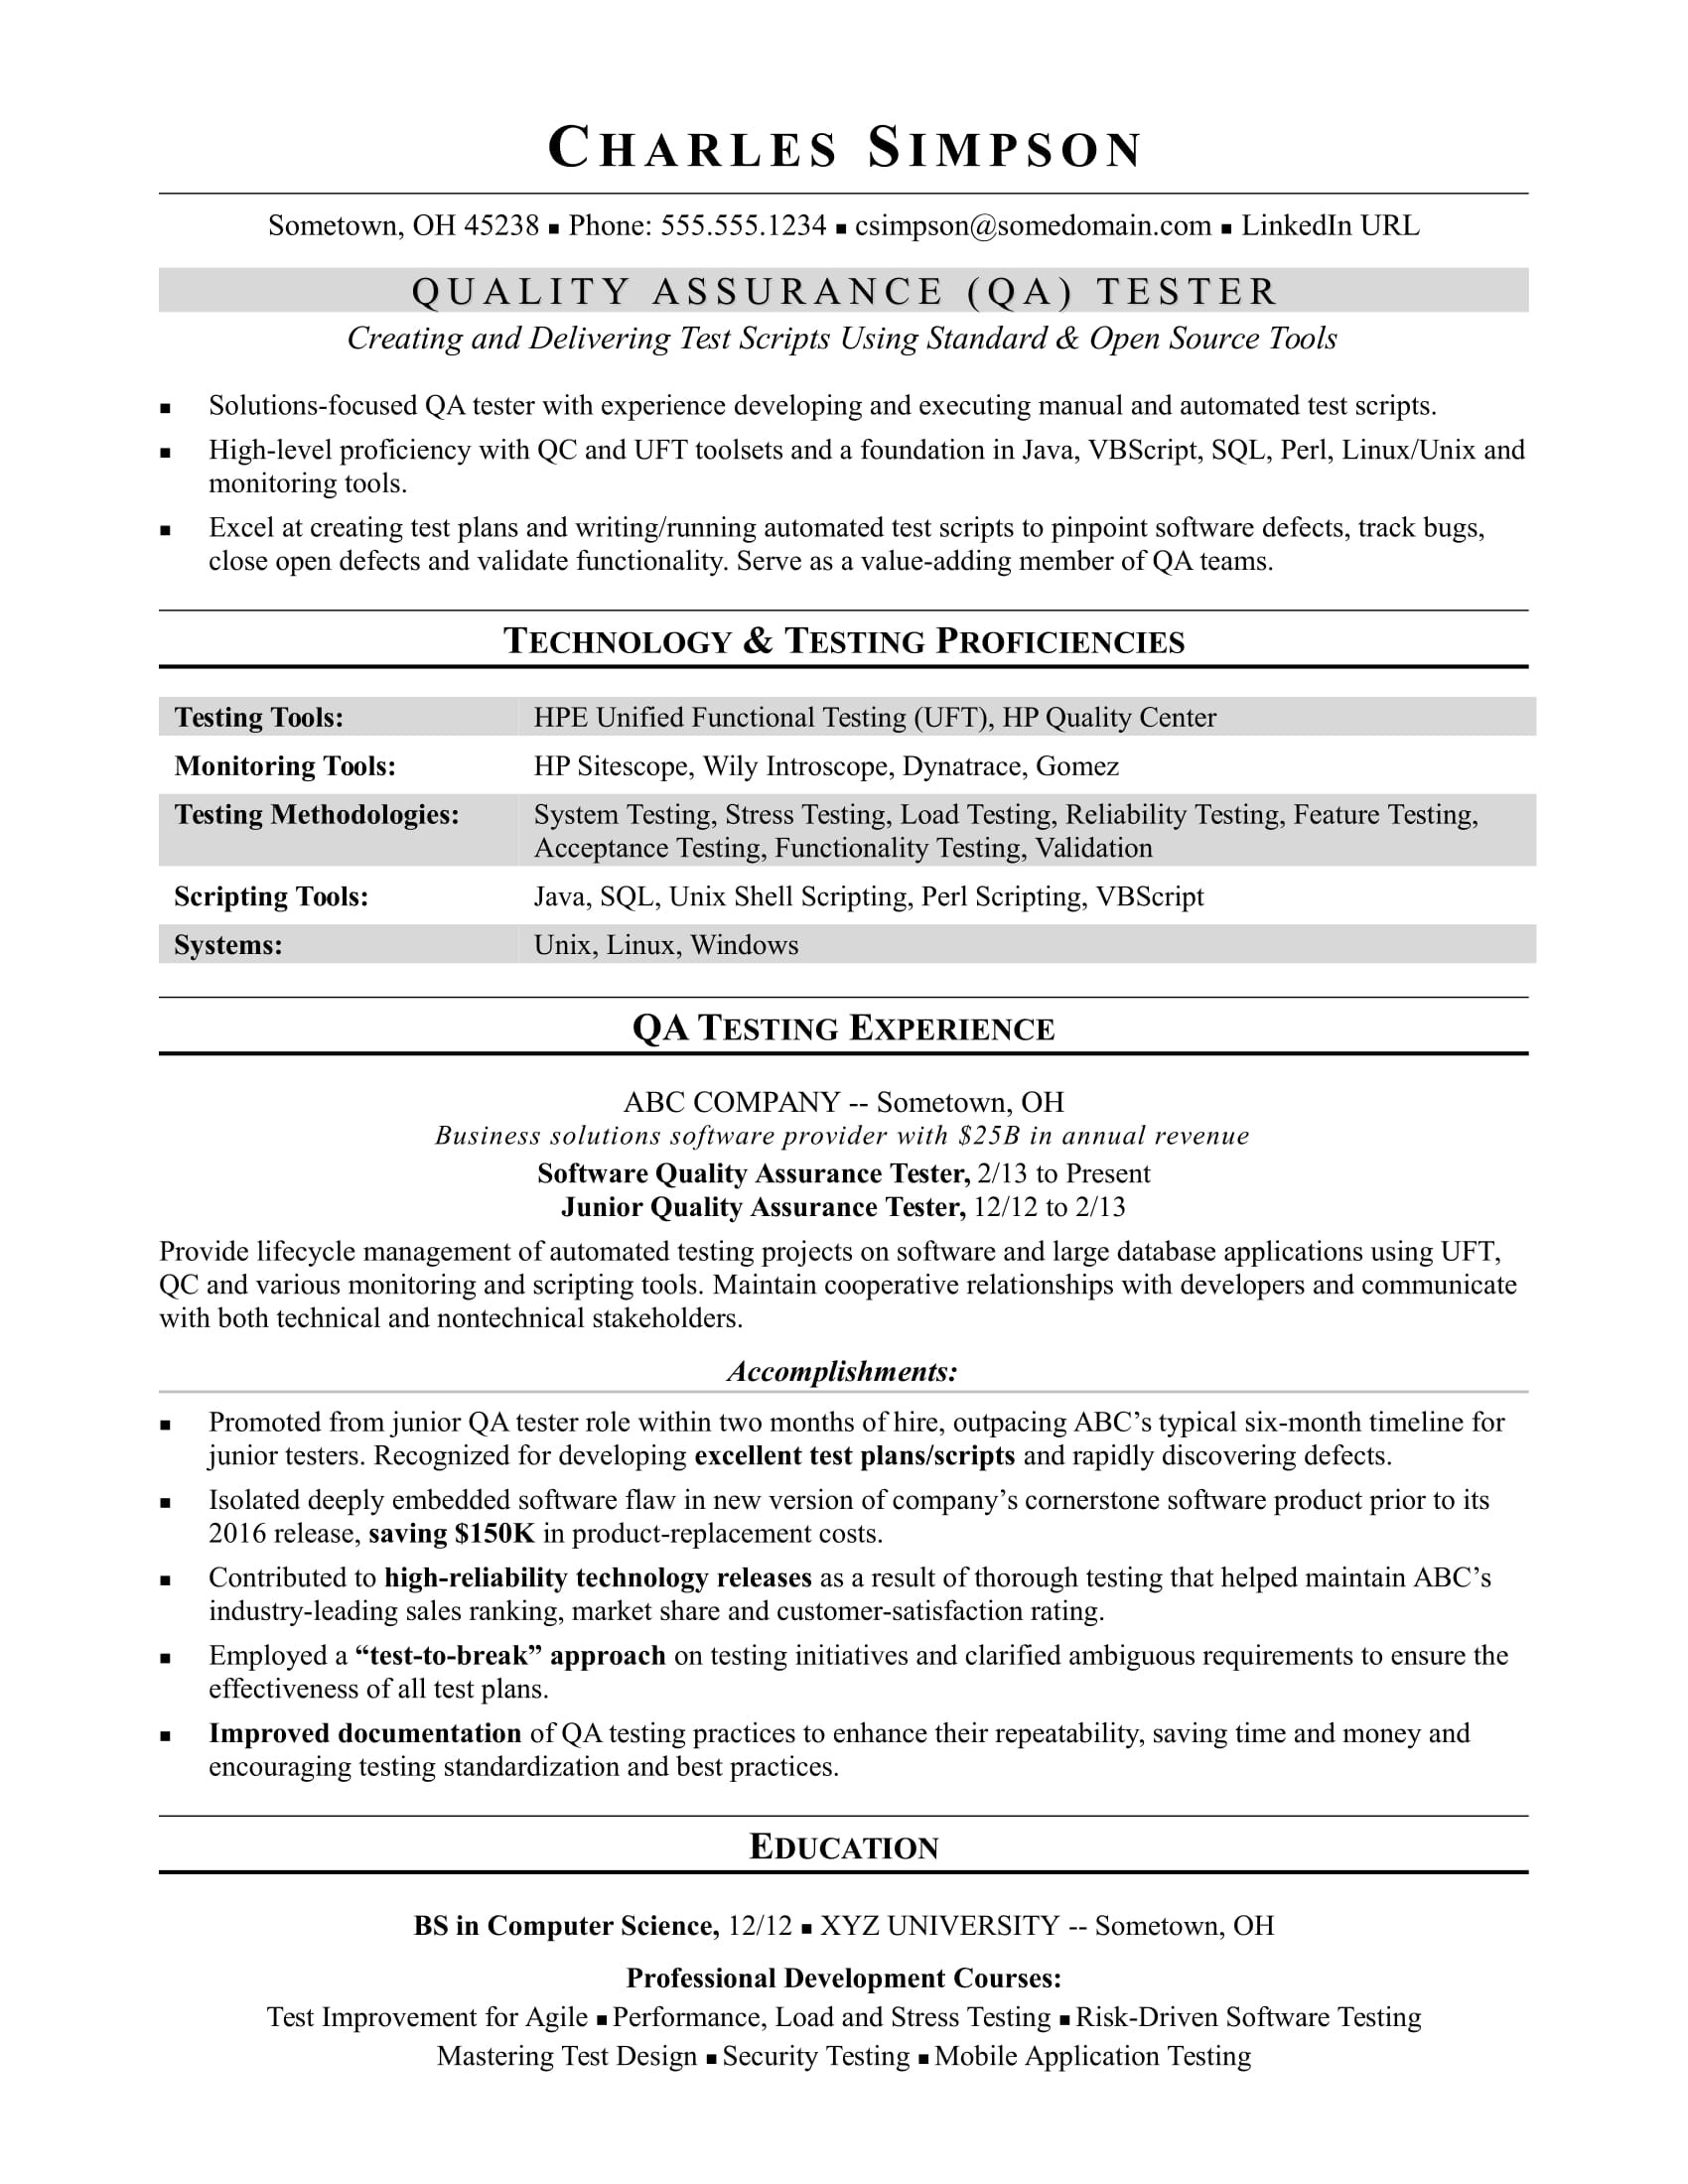 Sample Resume Of A software Tester Sample Resume for A Midlevel Qa software Tester Monster.com